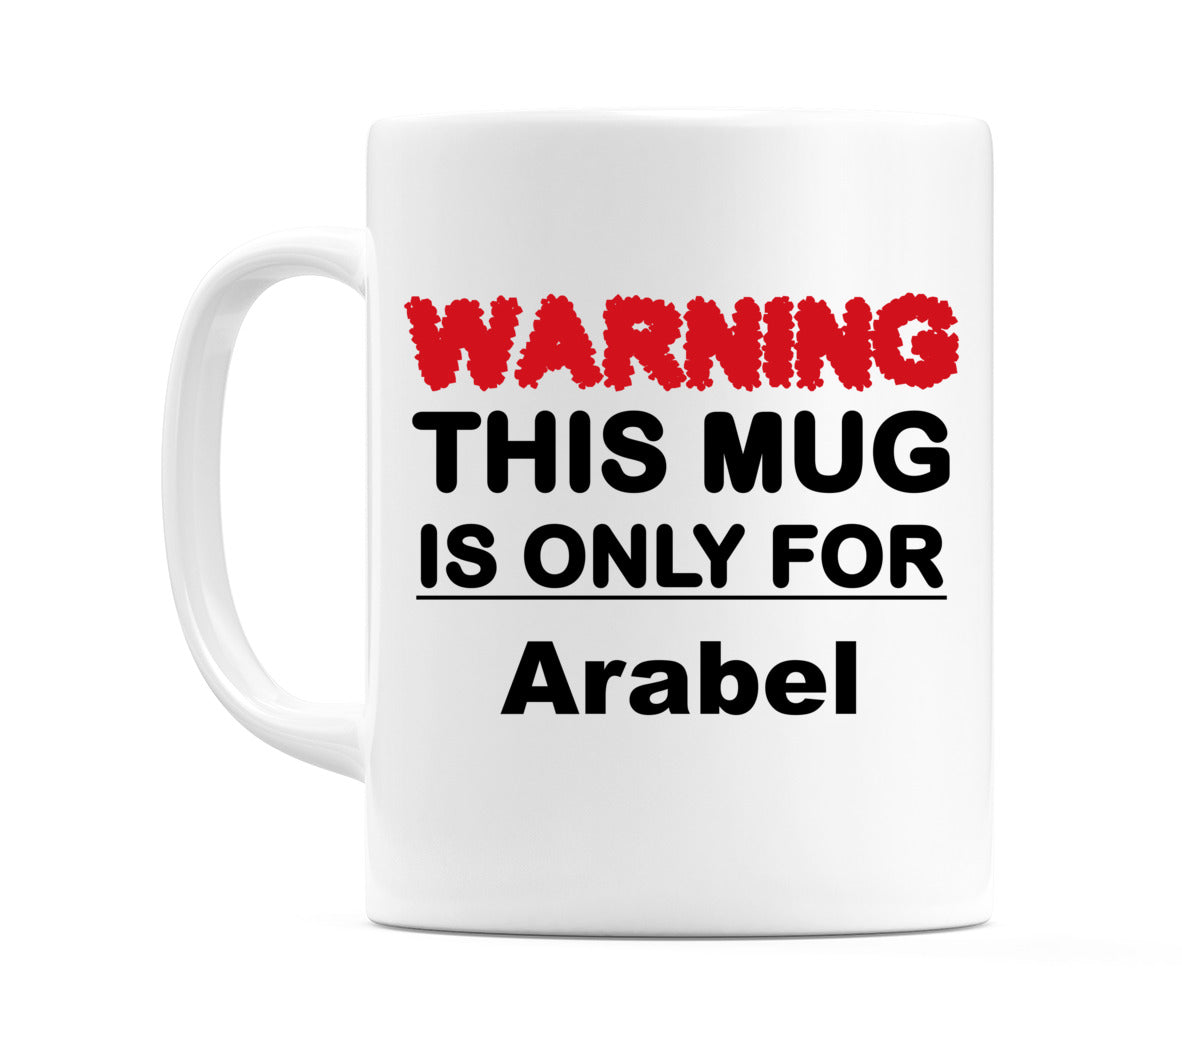 Warning This Mug is ONLY for Arabel Mug